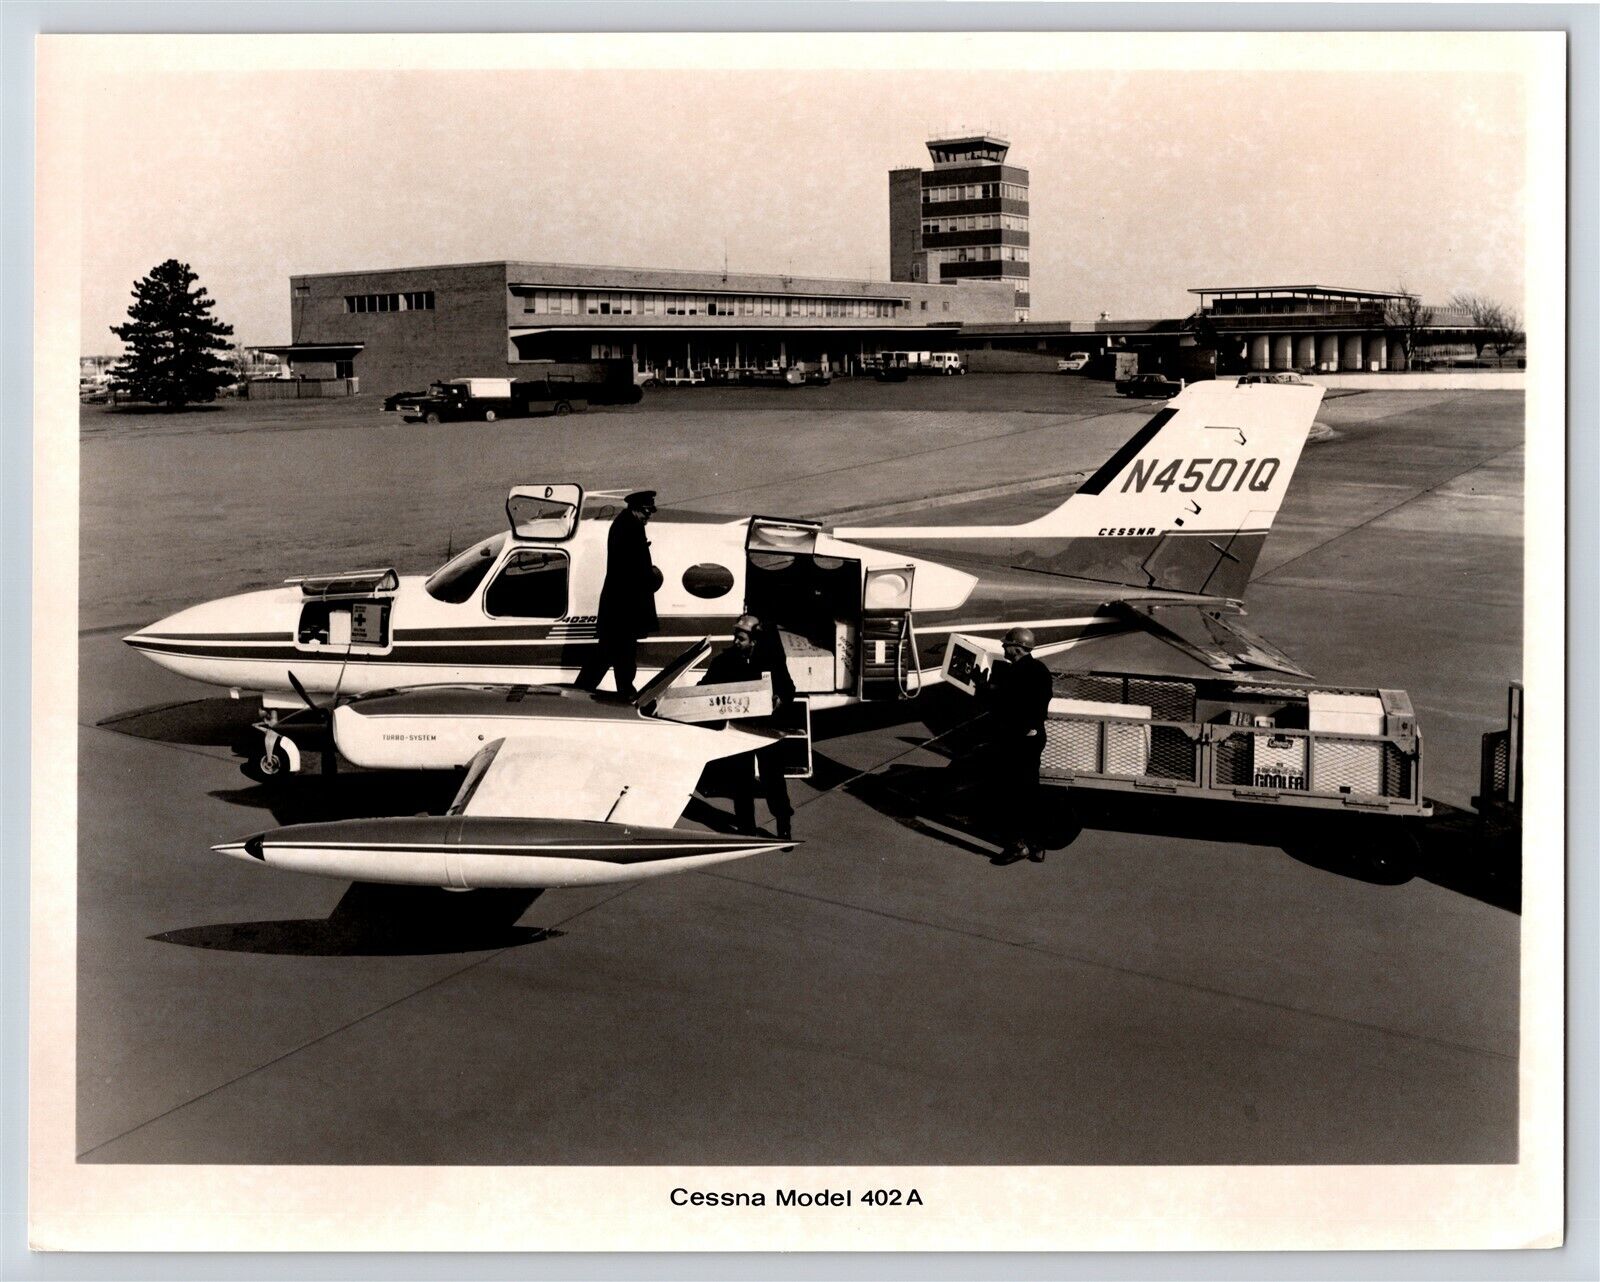 Aviation Airplane c1970s Cessna Model 402A 8x10 B&W Press Photo N4501Q C3